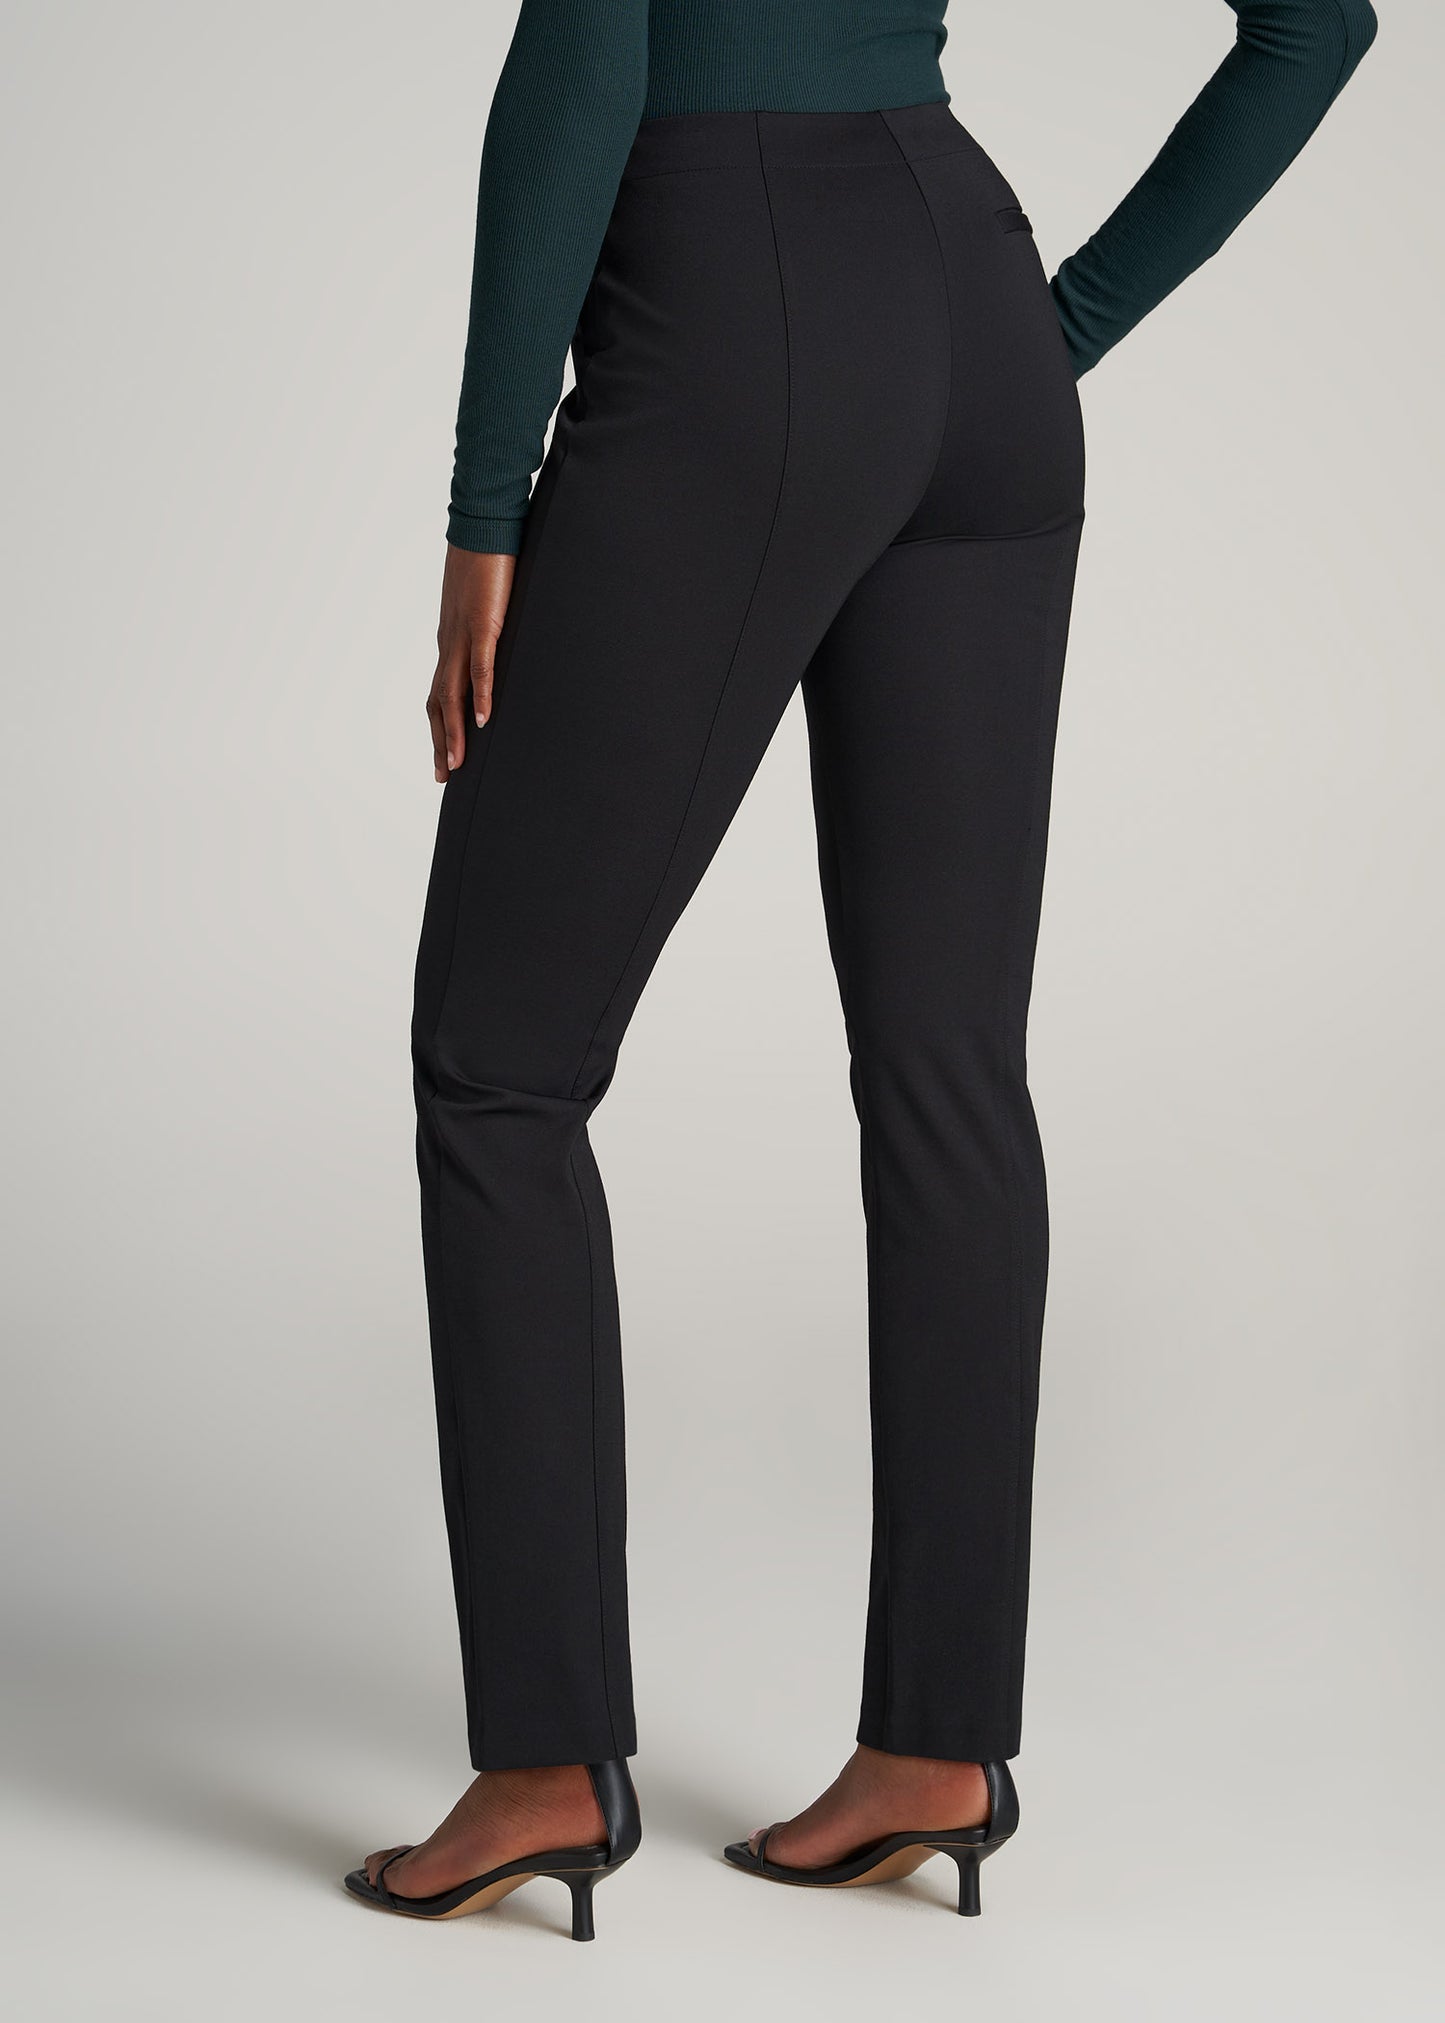 Women's Tall Dress Pants: Slim Leg Black Dress Pant | American Tall